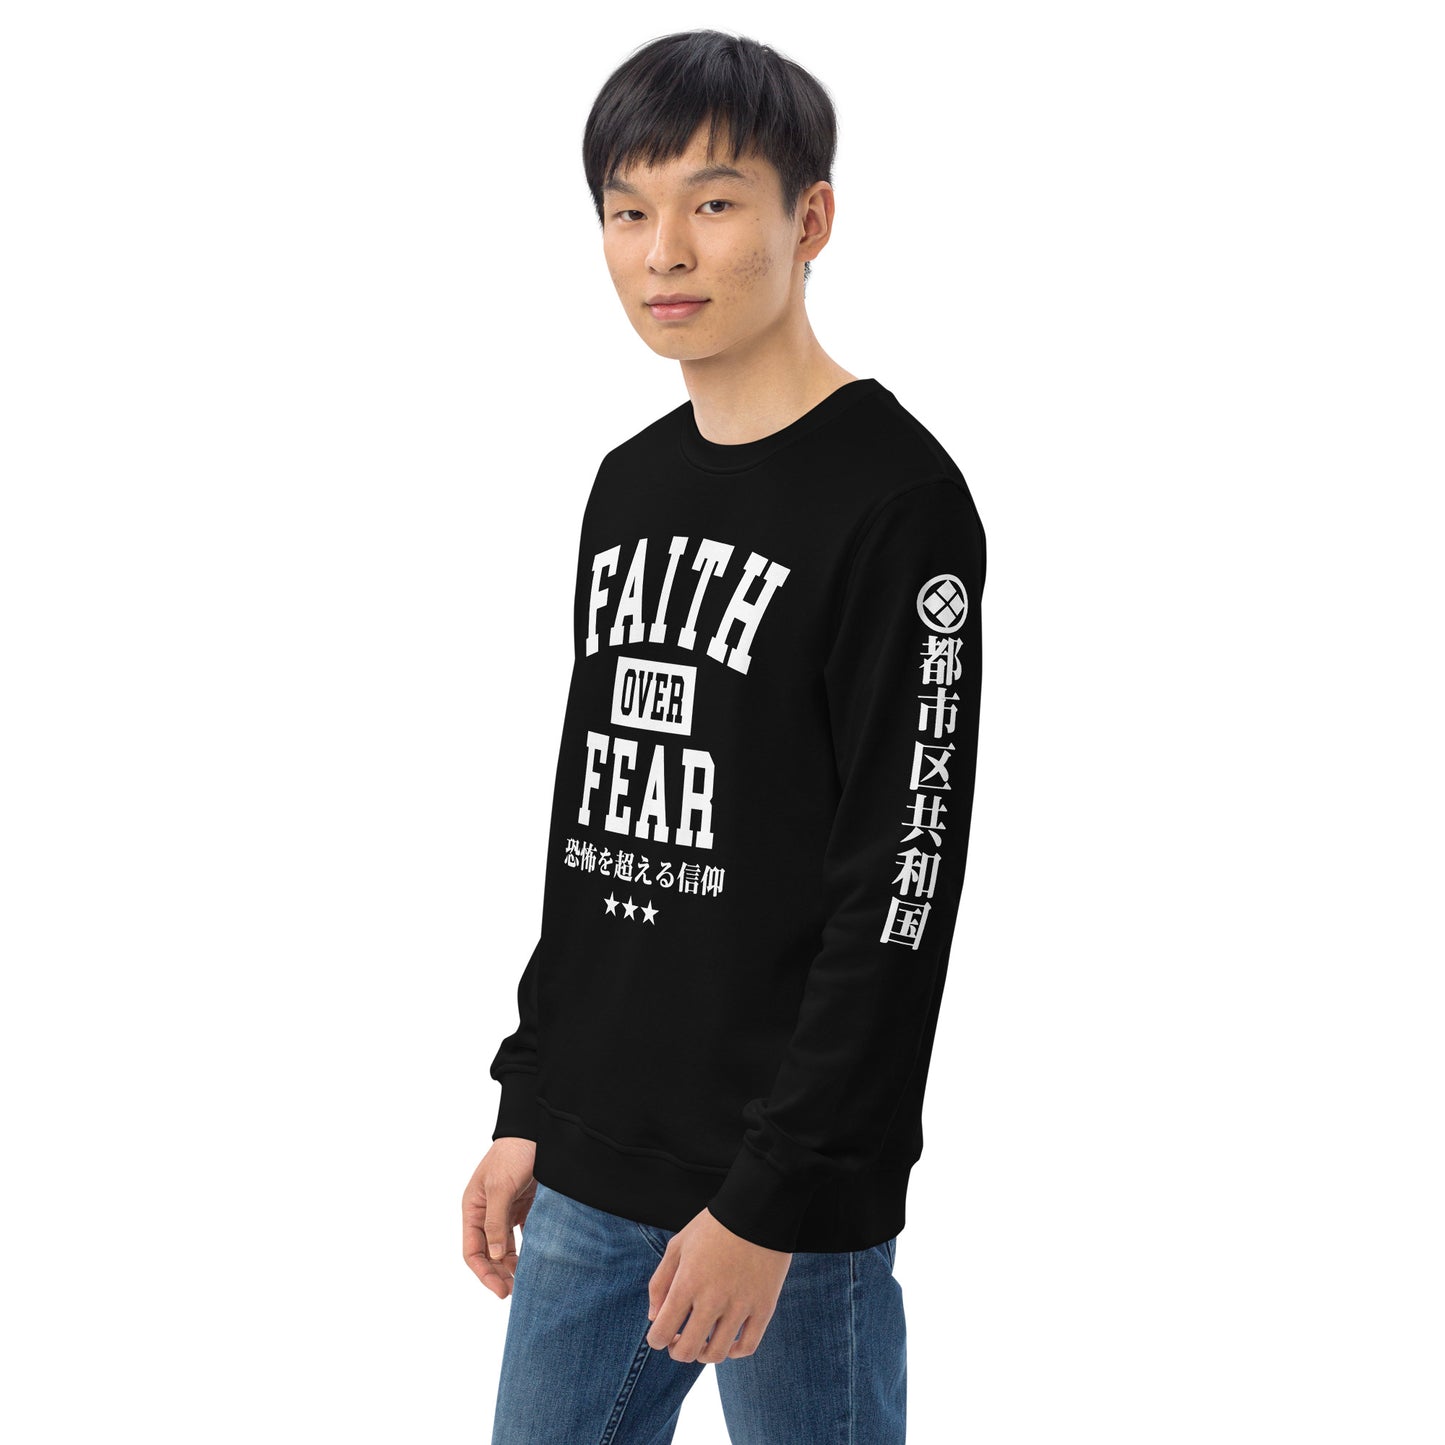 "Faith Over Fear" Collegiate Sweatshirt